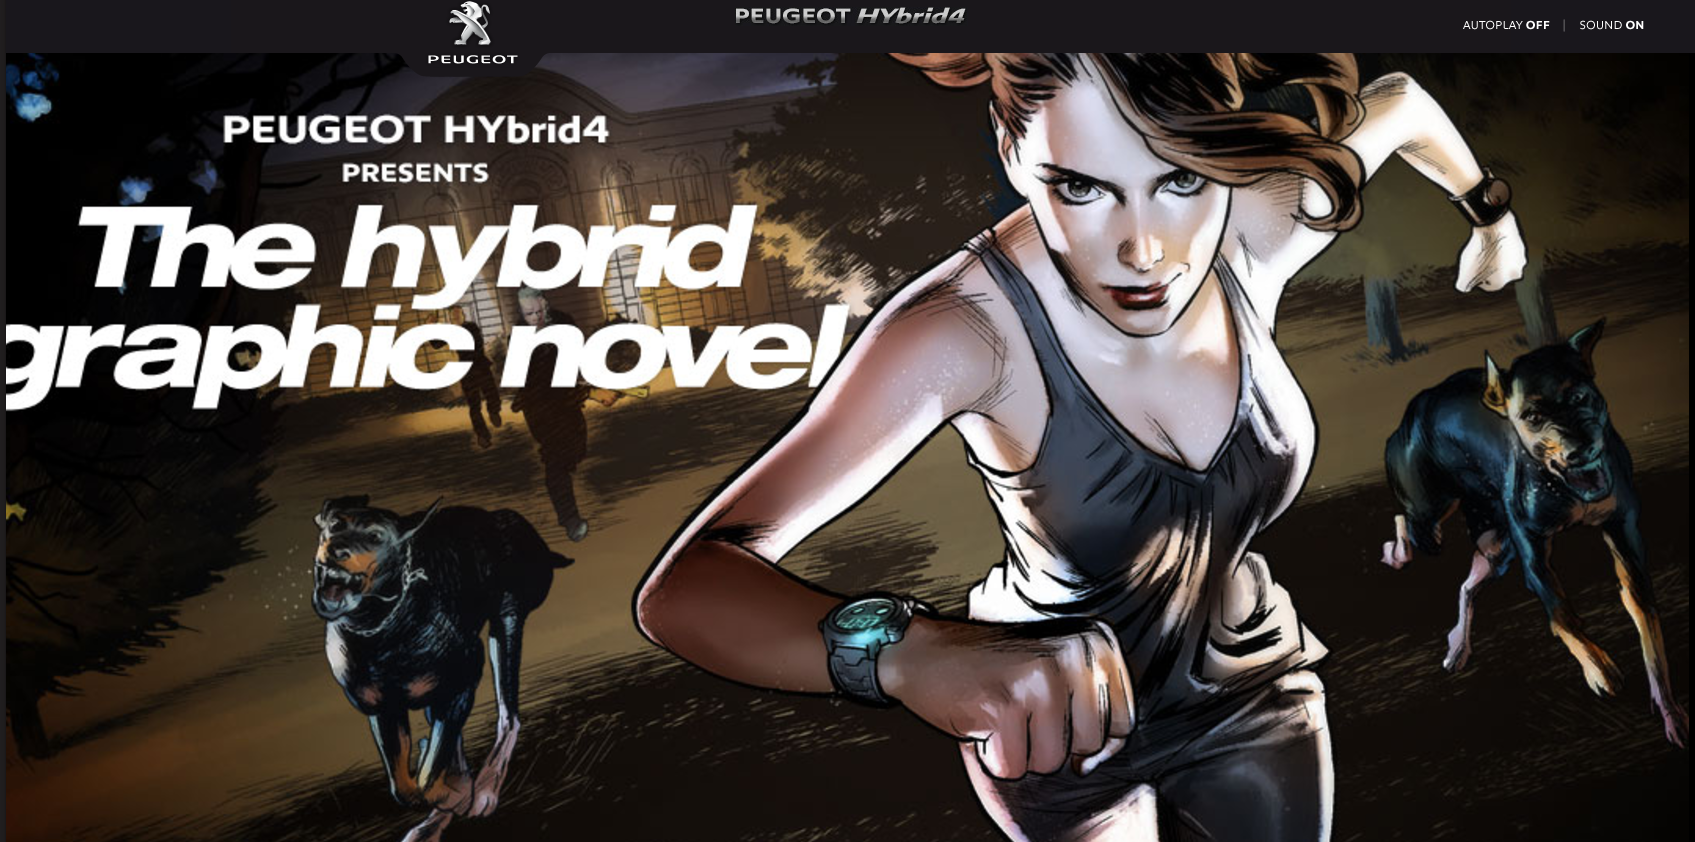 Peugot HYbrid 4 Presents The Hybrid Graphic Novel